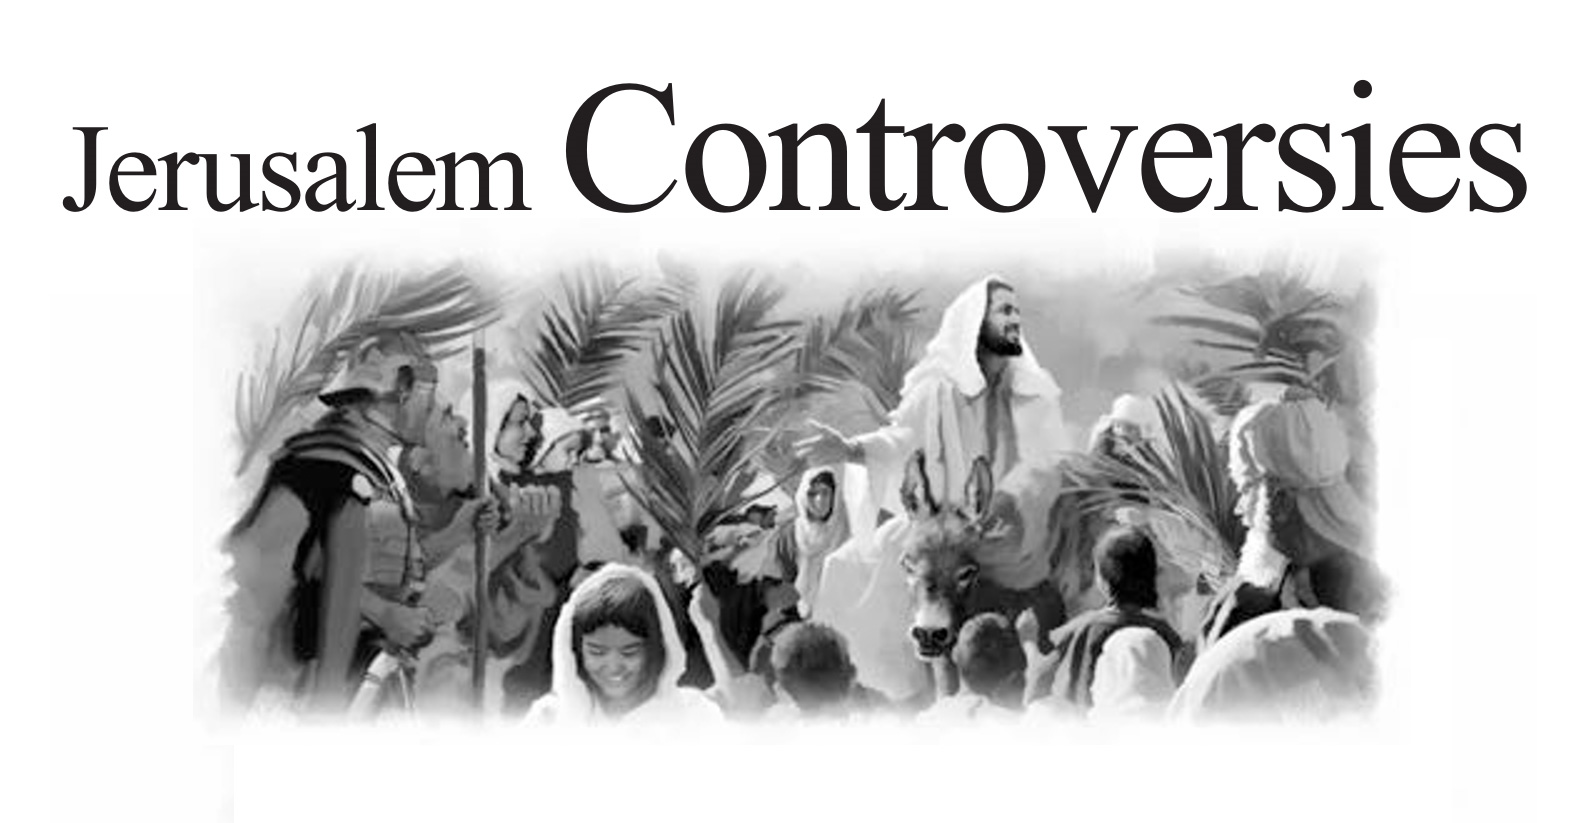 Jerusalem Controversies